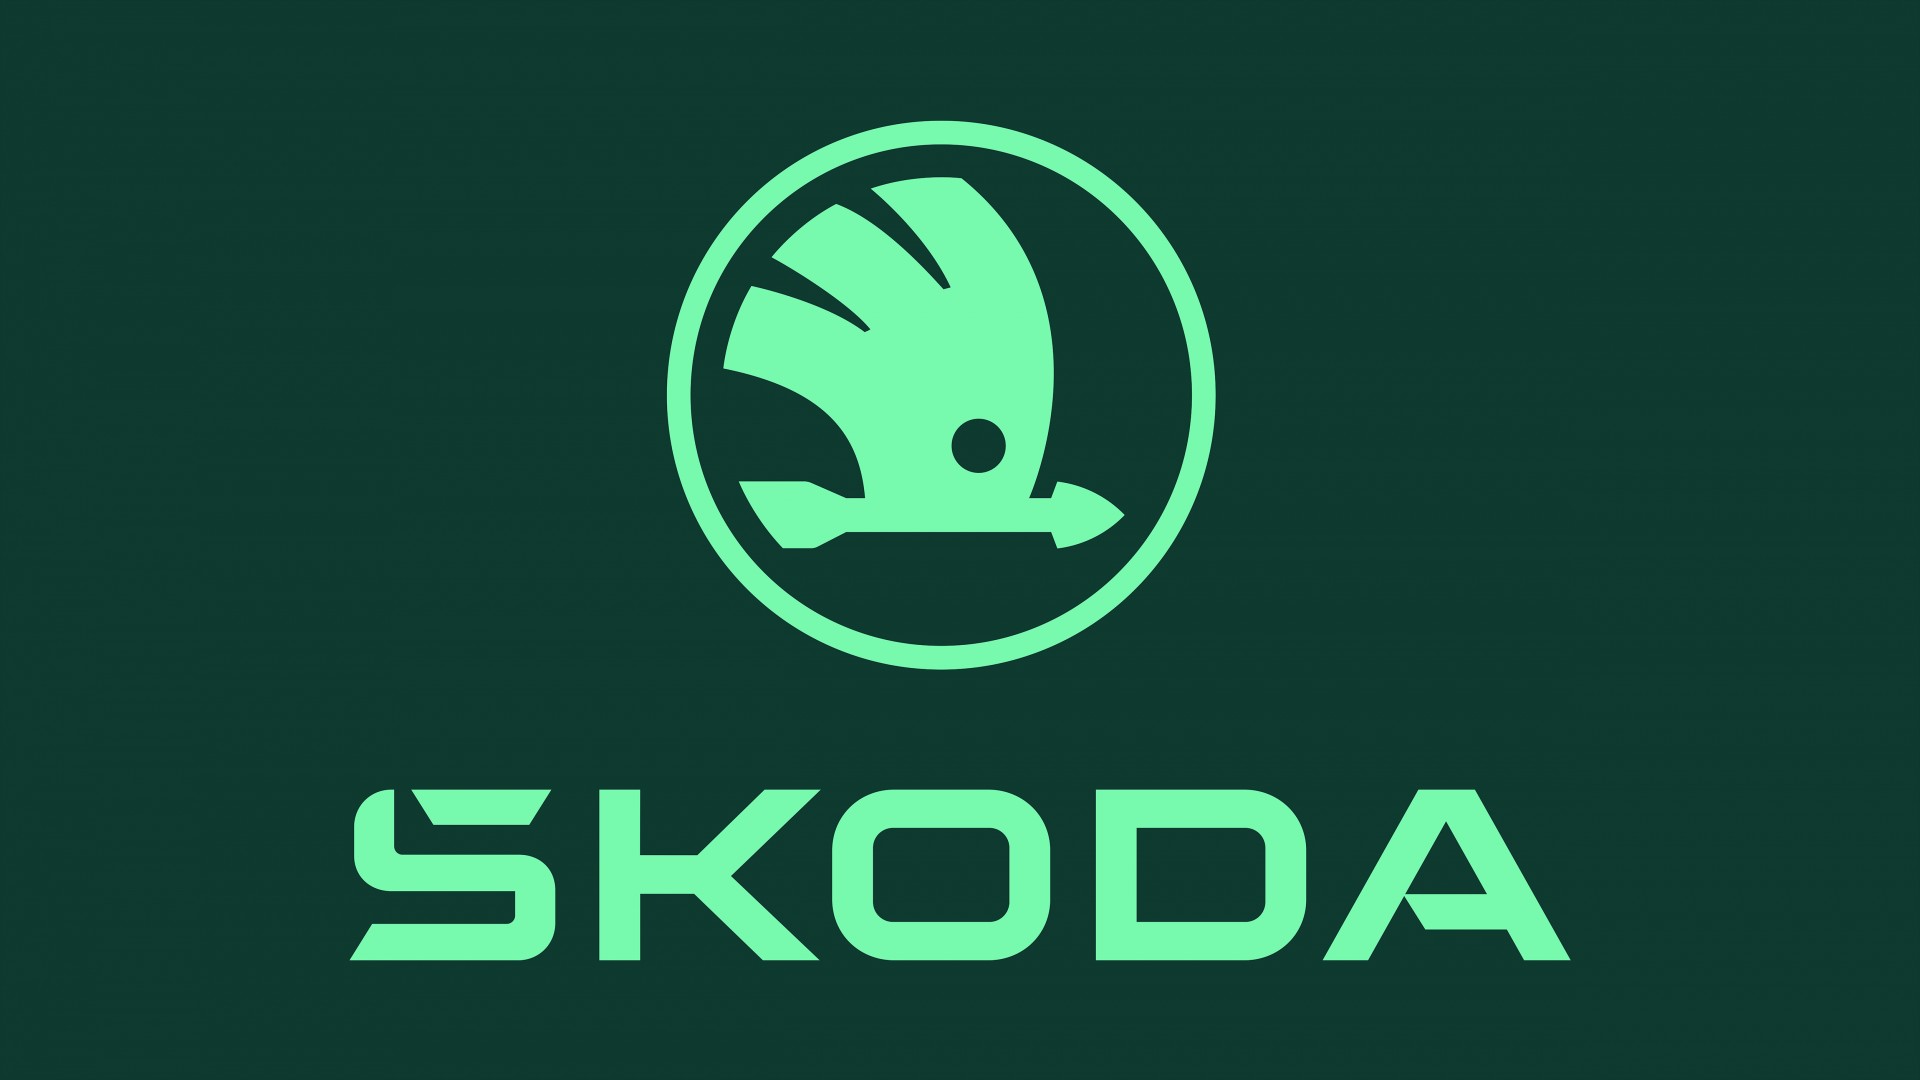 01_SKODA_logo_picturemark-1920x1080